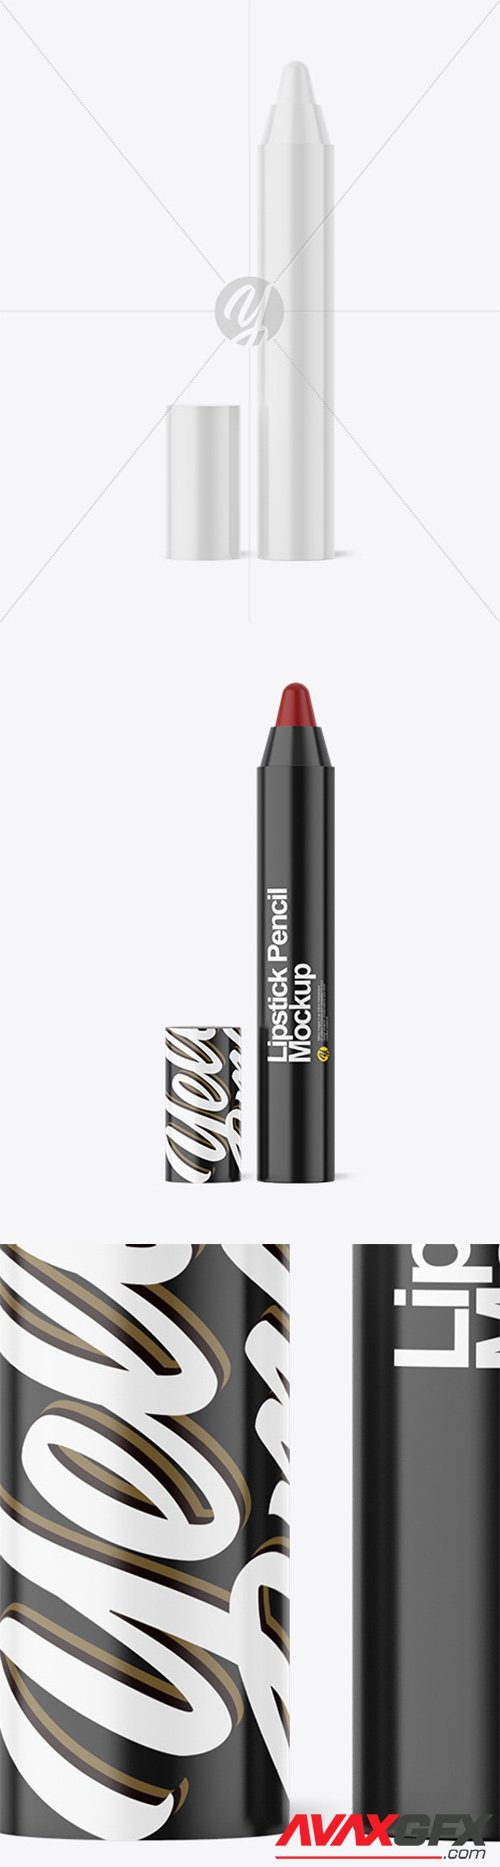 Glossy Lipstick Pencil Mockup 82146